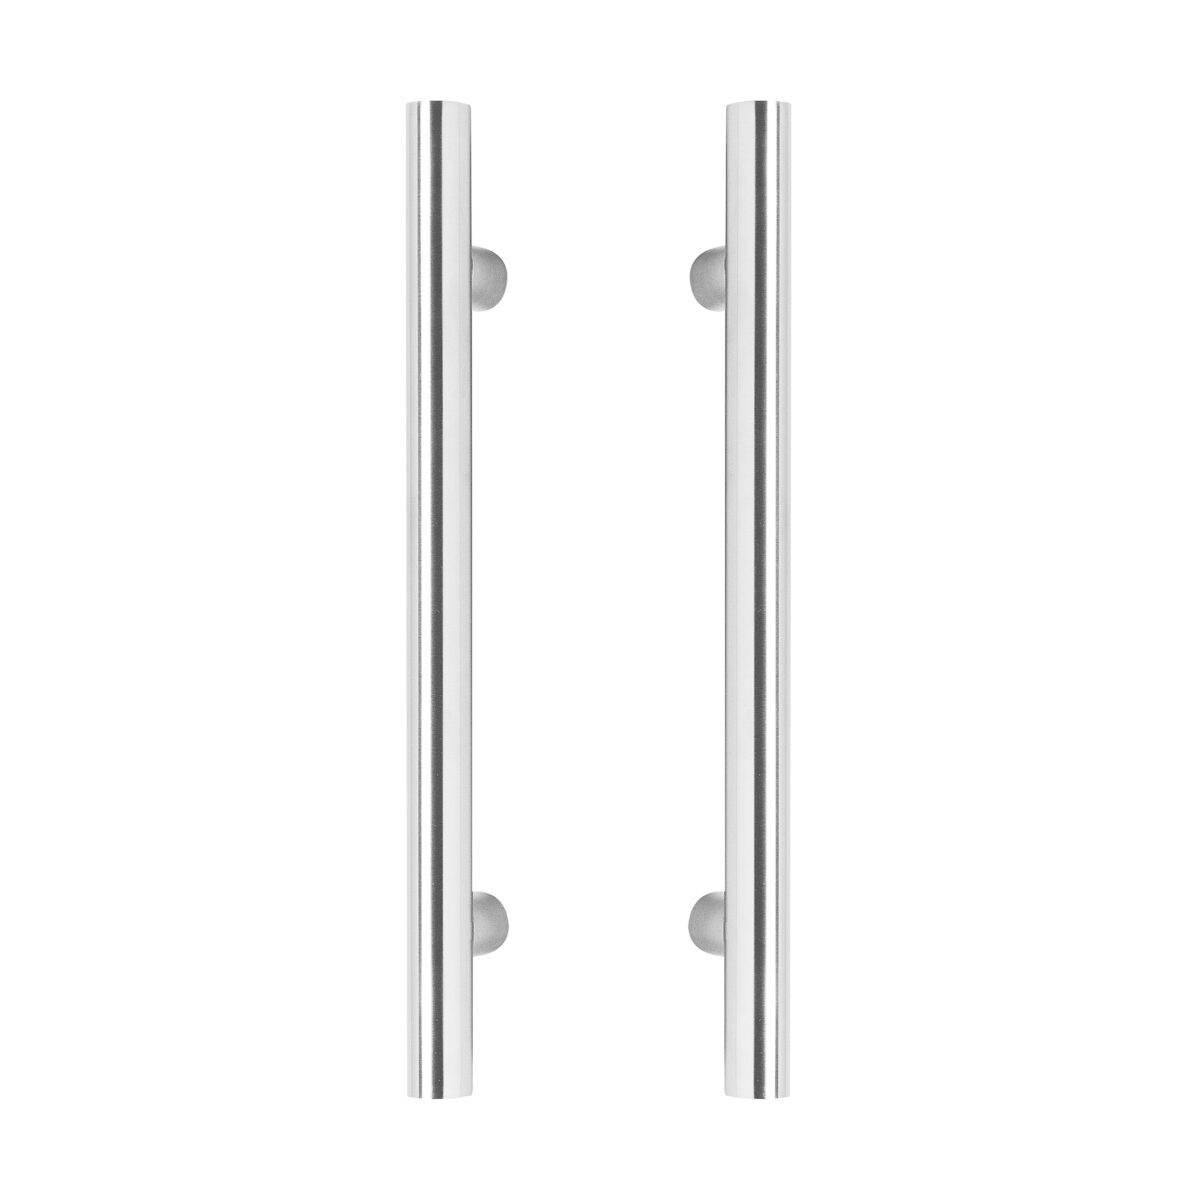 Intersteel Door handles per pair T-shape 1000x80x30 Centre-to-centre 800 stainless steel